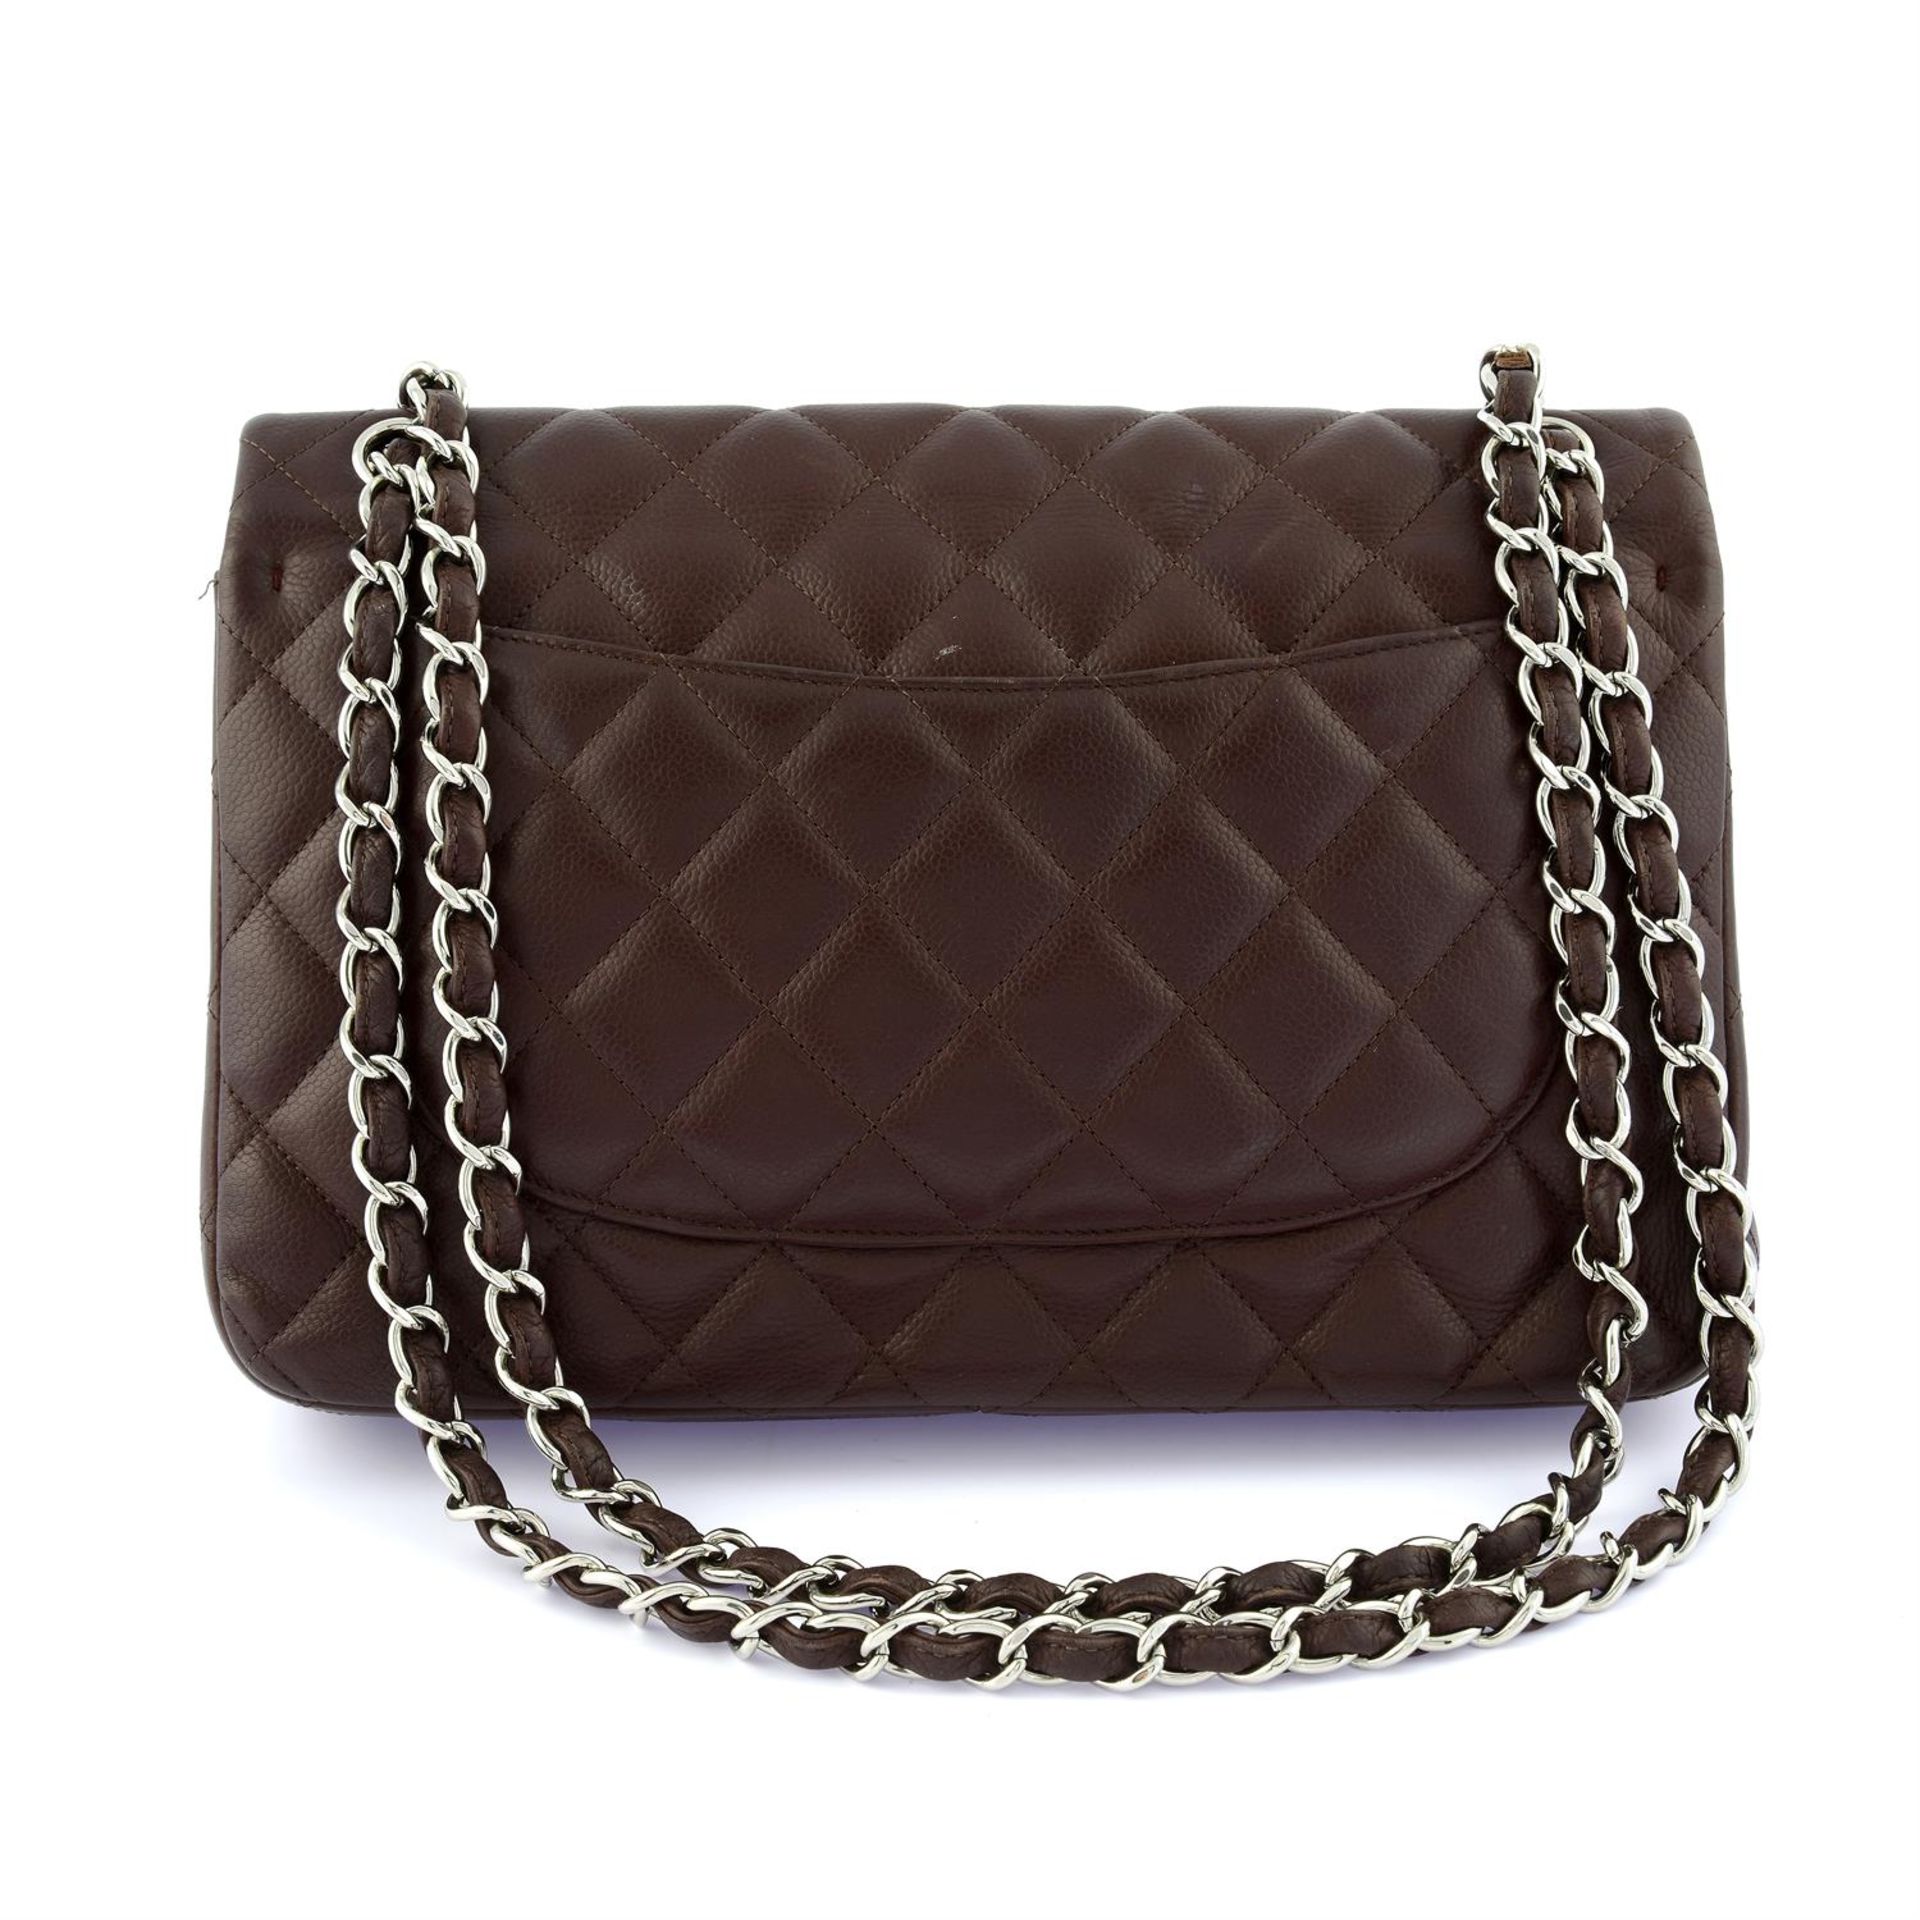 CHANEL - a burgundy caviar leather double flap classic handbag. - Image 2 of 6